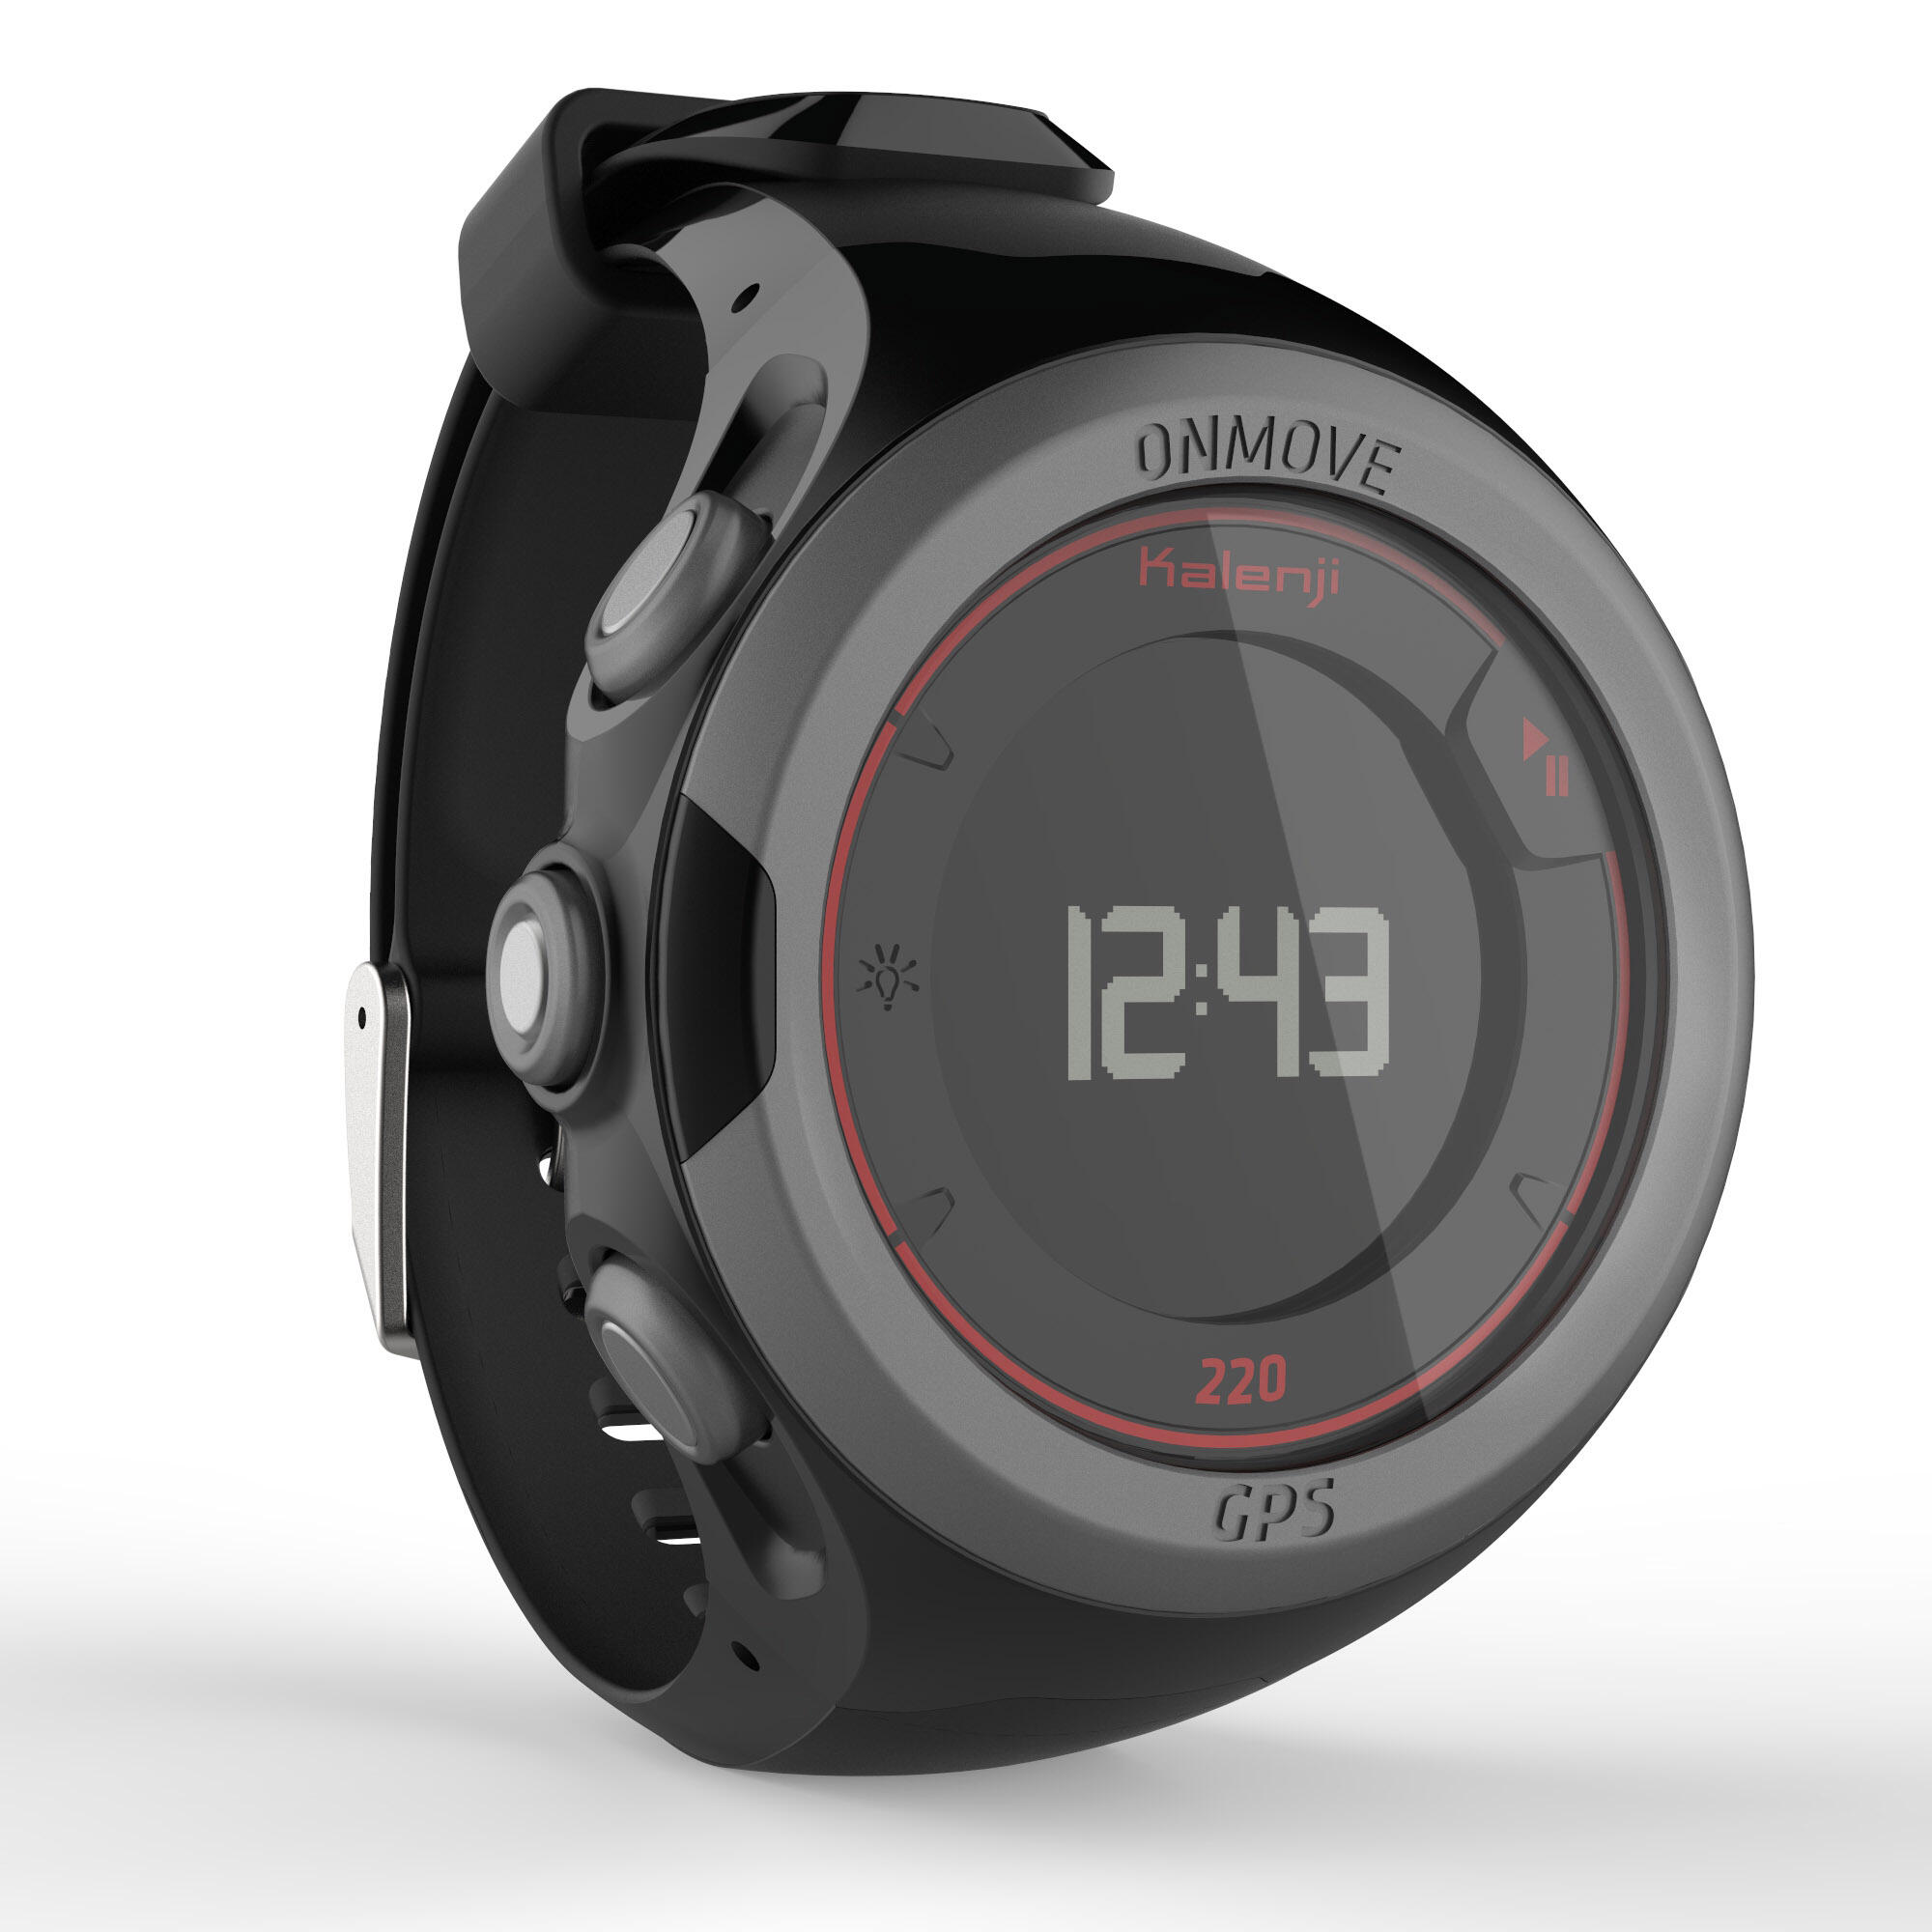 ONMOVE 220 GPS running watch - BLACK 